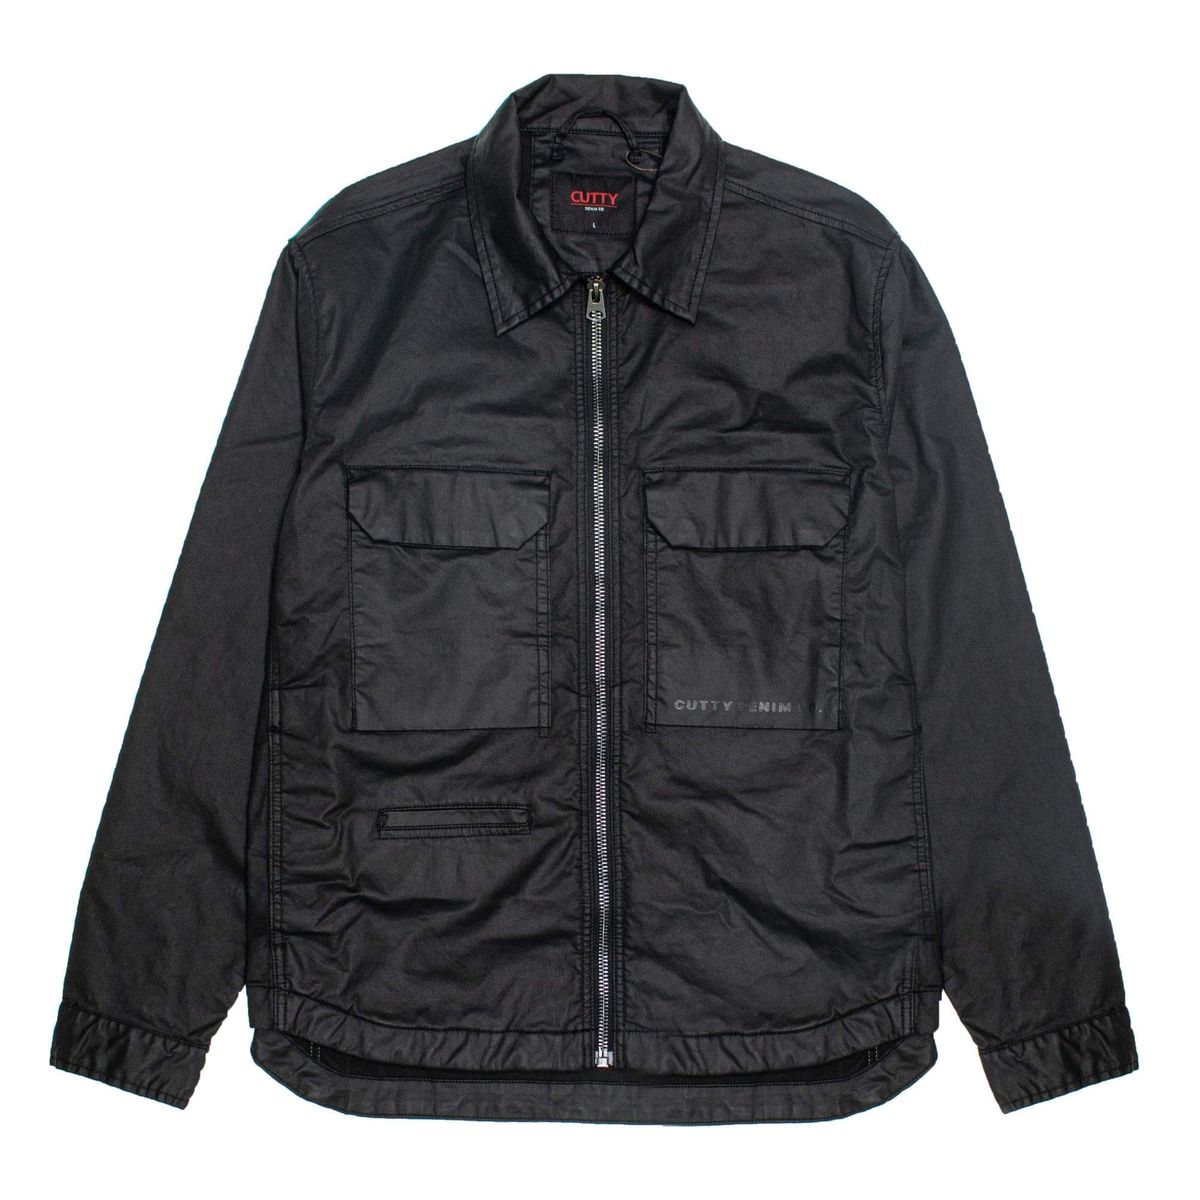 CUTTY Leader - Coated Mens Black Denim Jacket | Shop Today. Get it ...